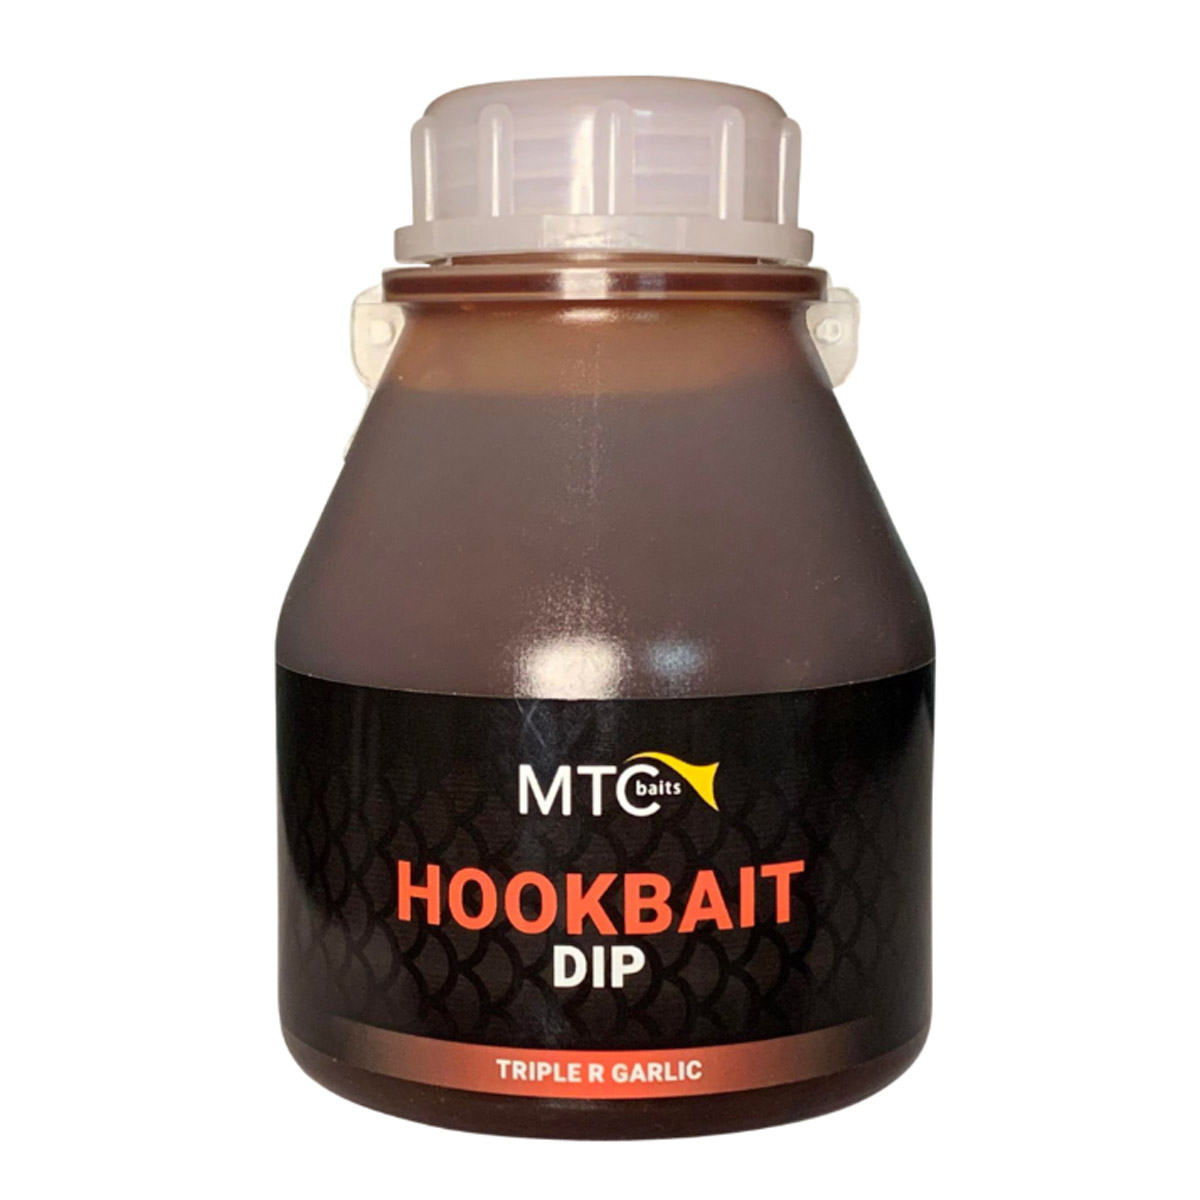 MTC Baits Hookbait Dip Triple R Garlic